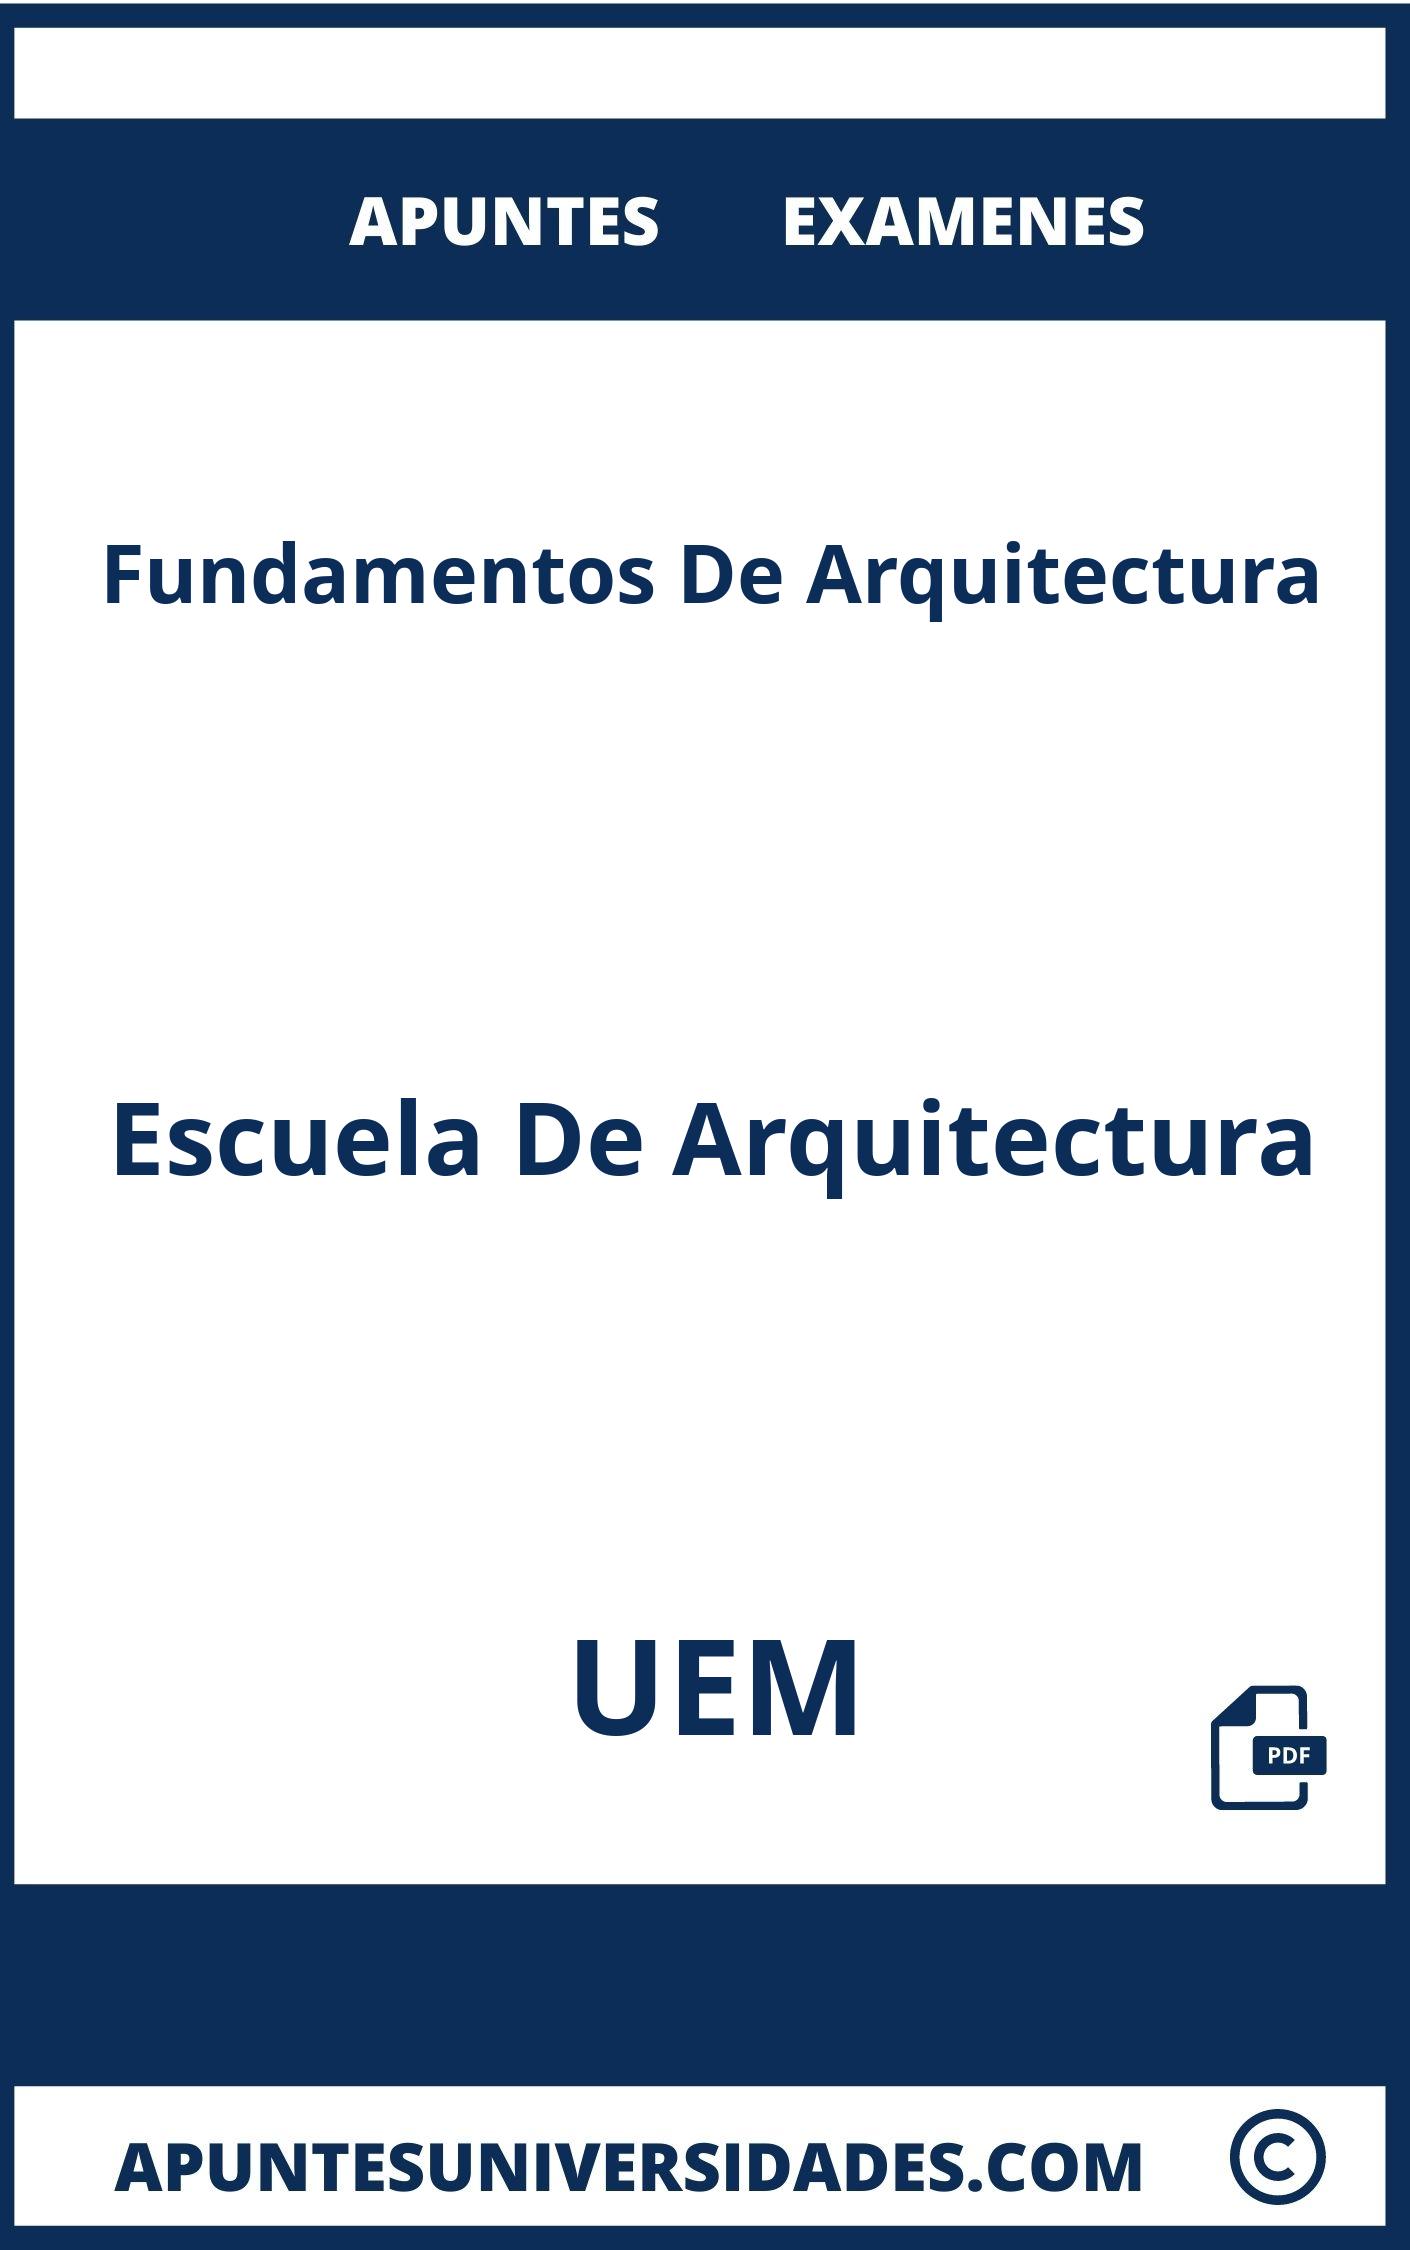 Examenes Apuntes Fundamentos De Arquitectura UEM